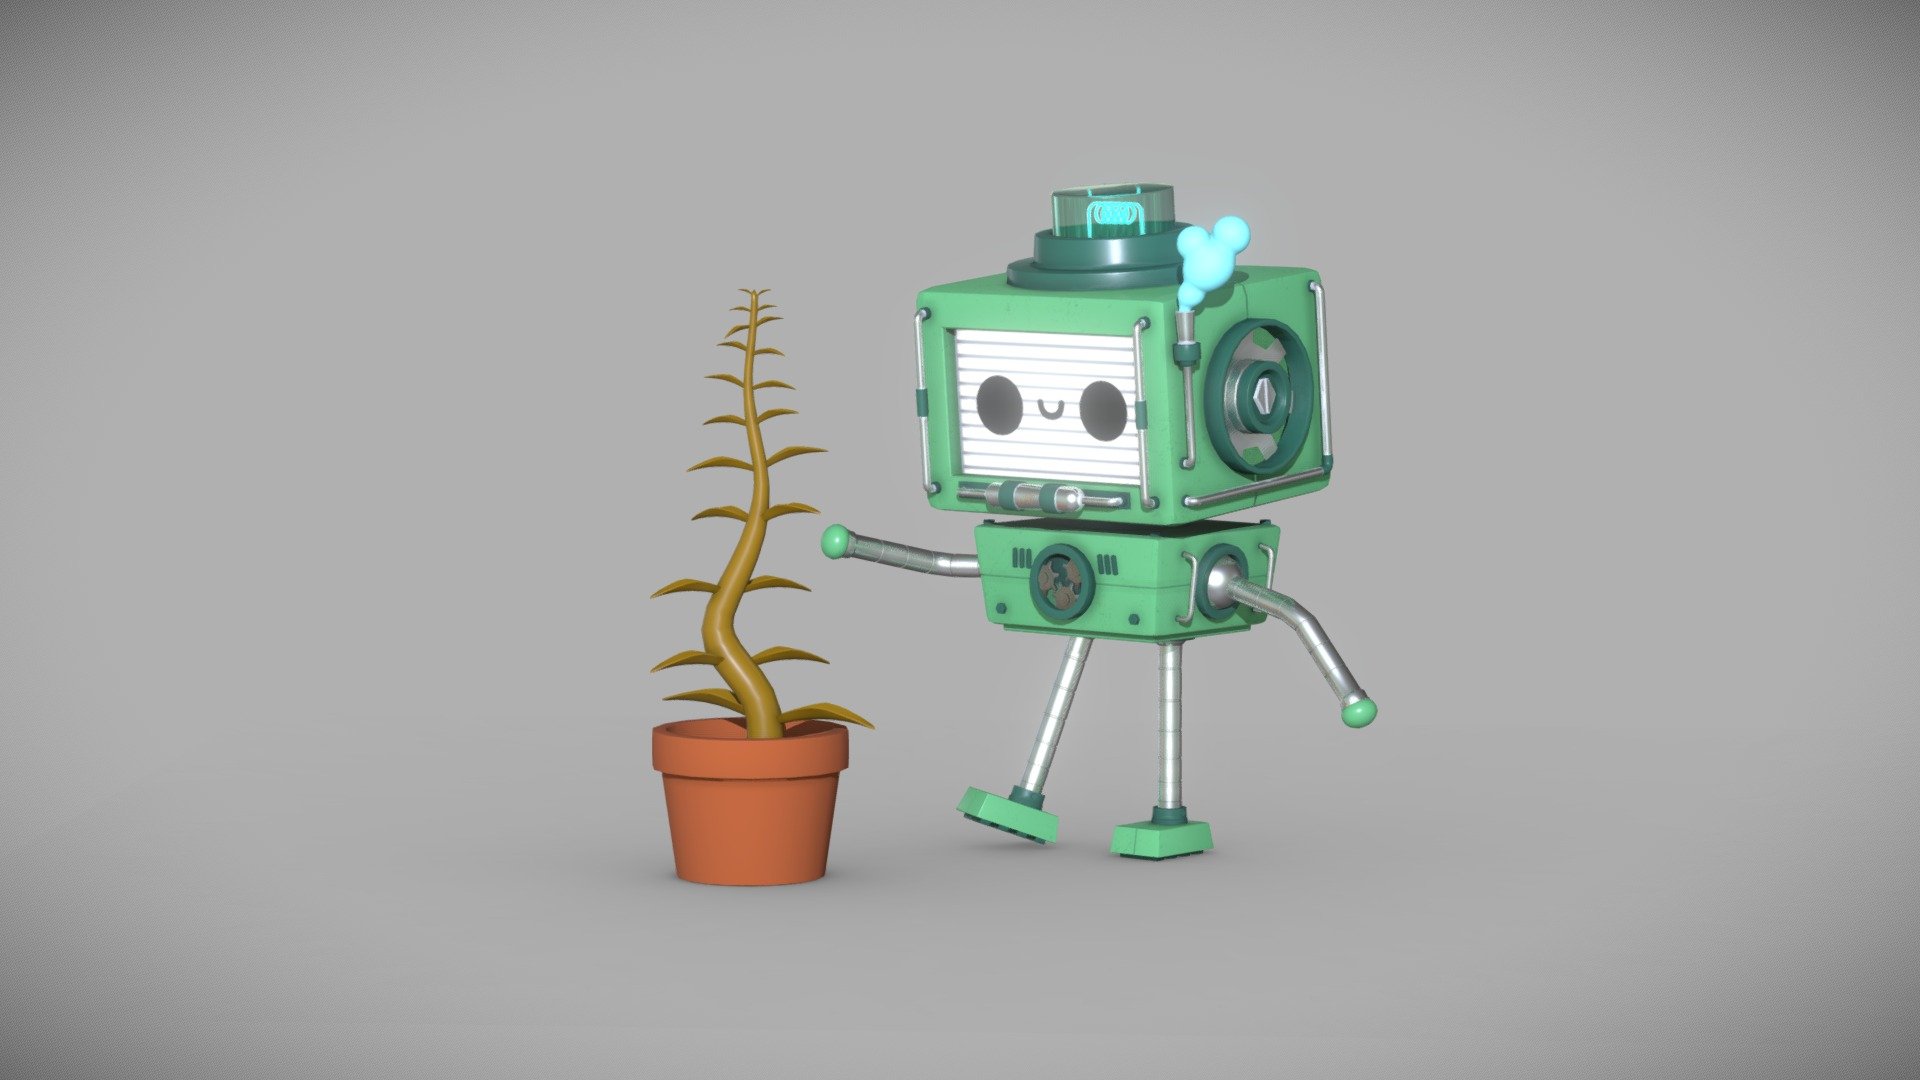 Based in the art of kiddo - Cute Robot - Download Free 3D model by Mora (@MoraAzul) 3d model